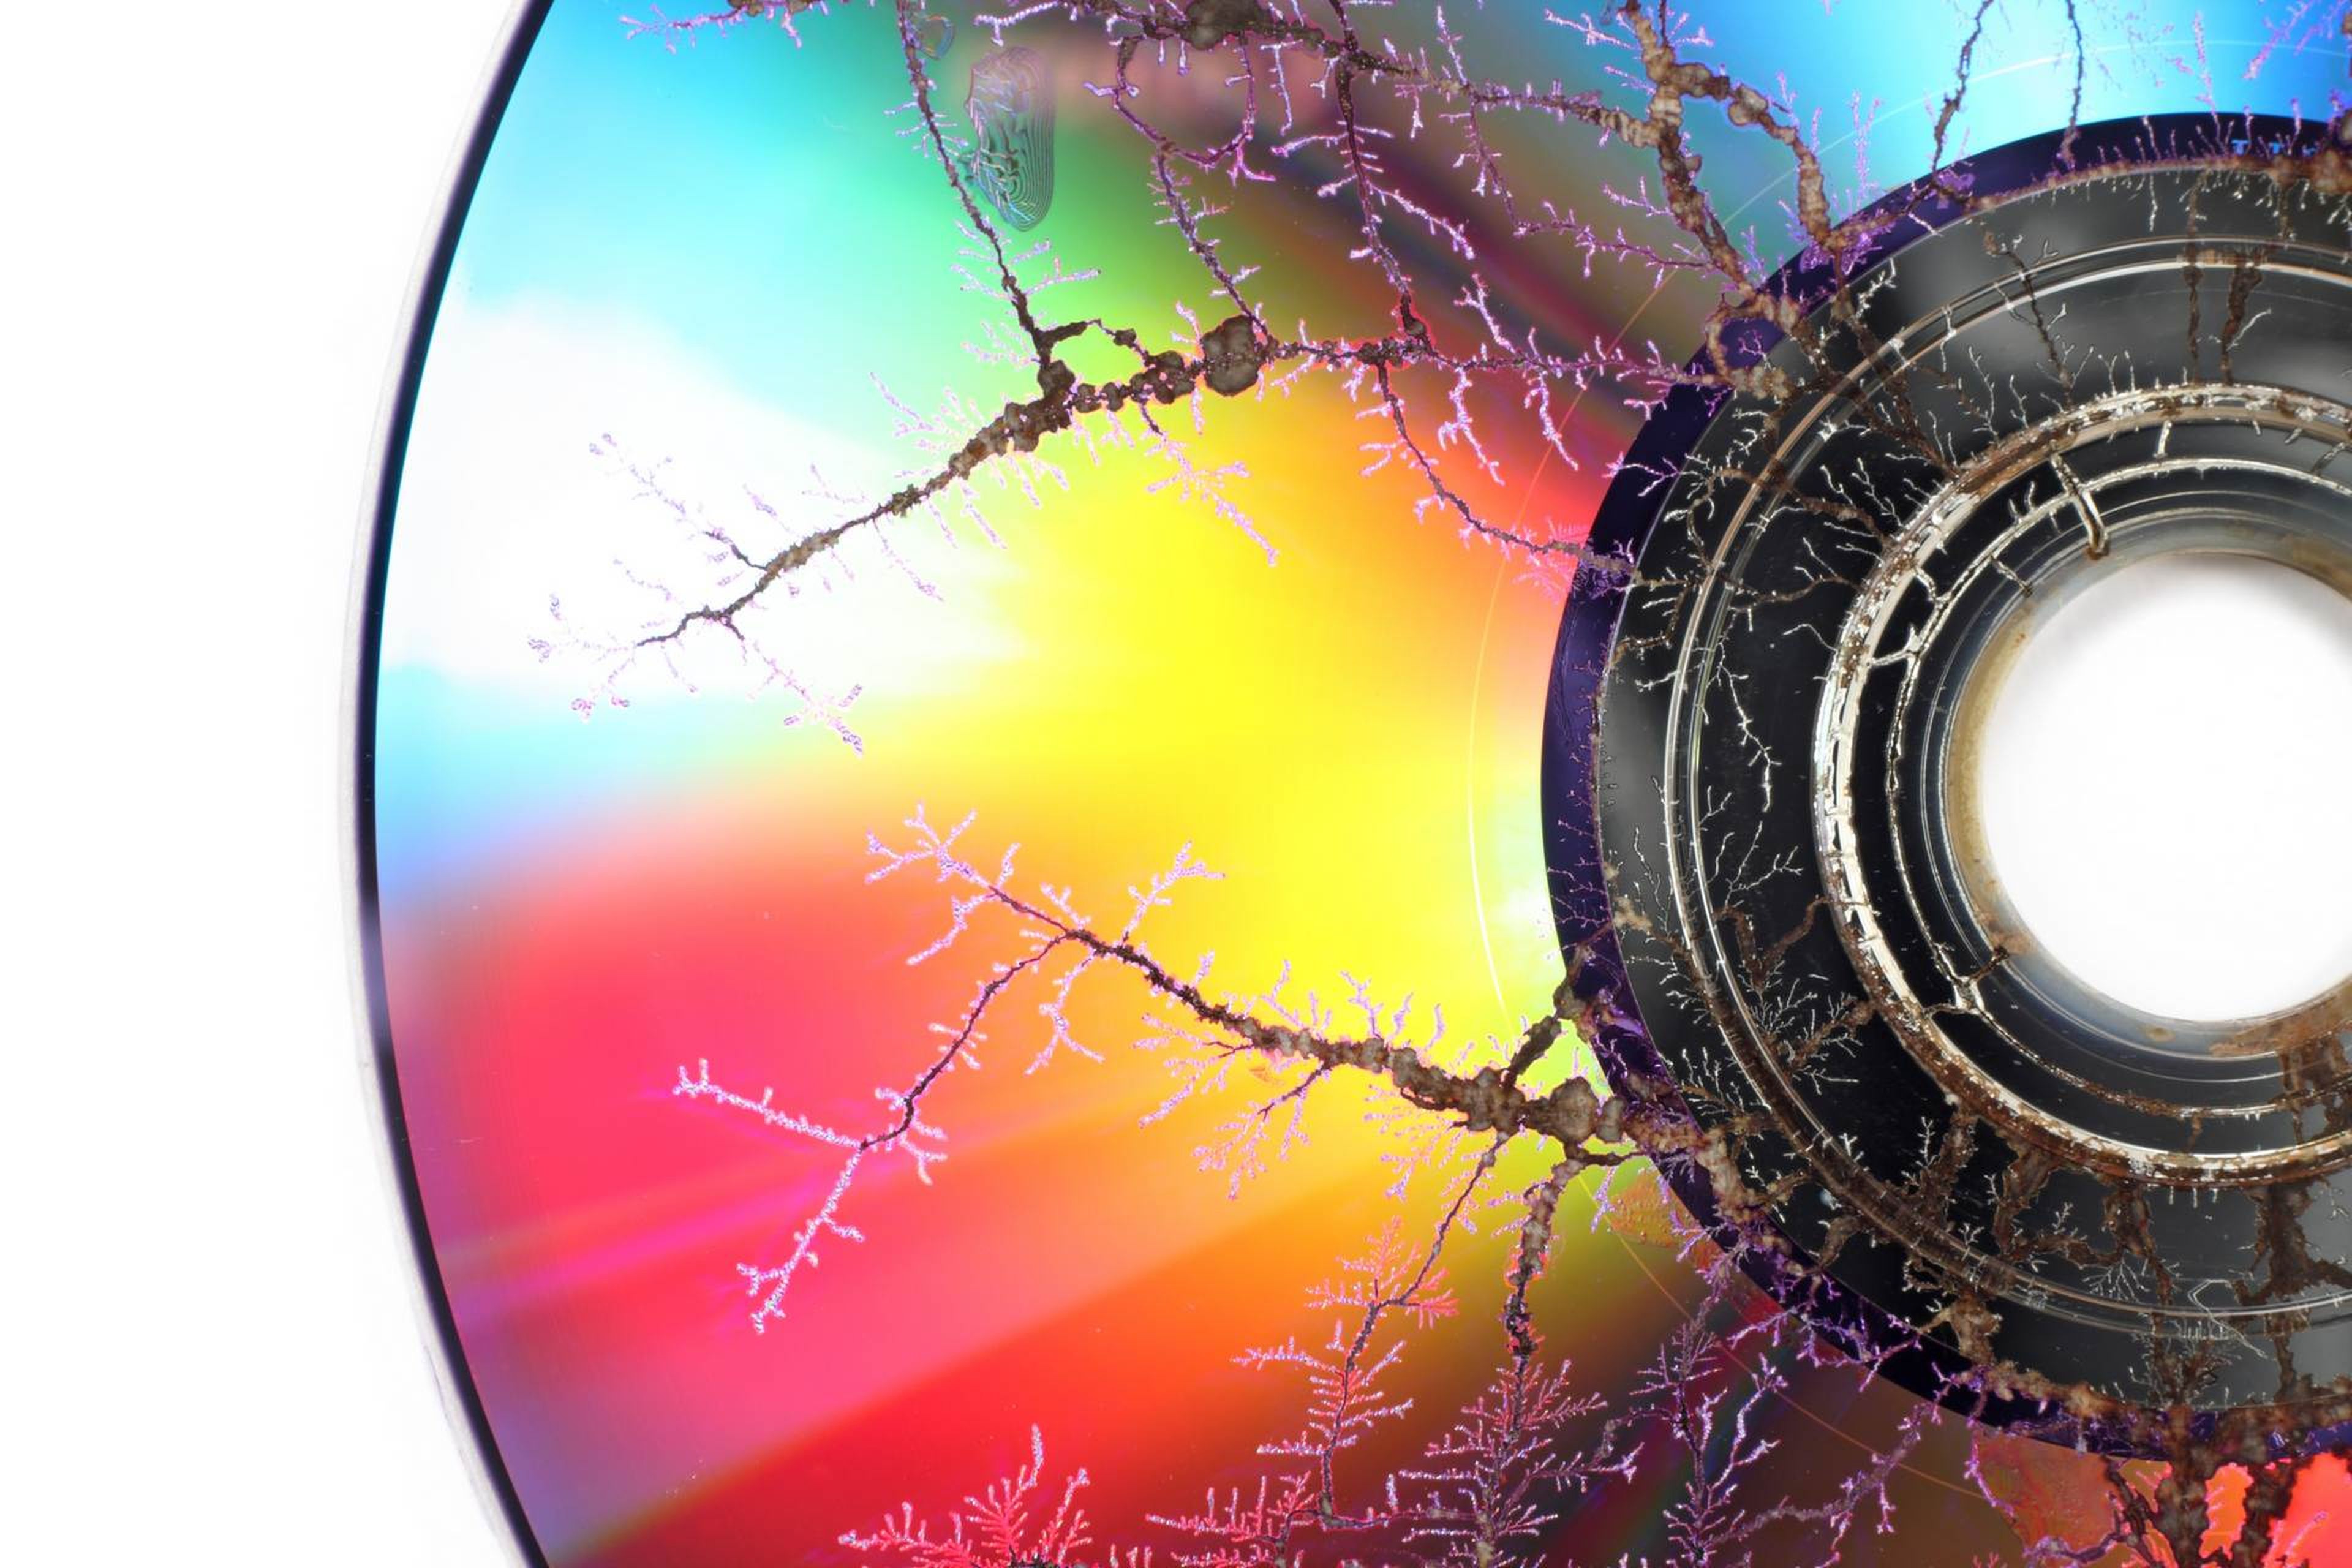 Recuperar archivos en un CD o DVD dañado